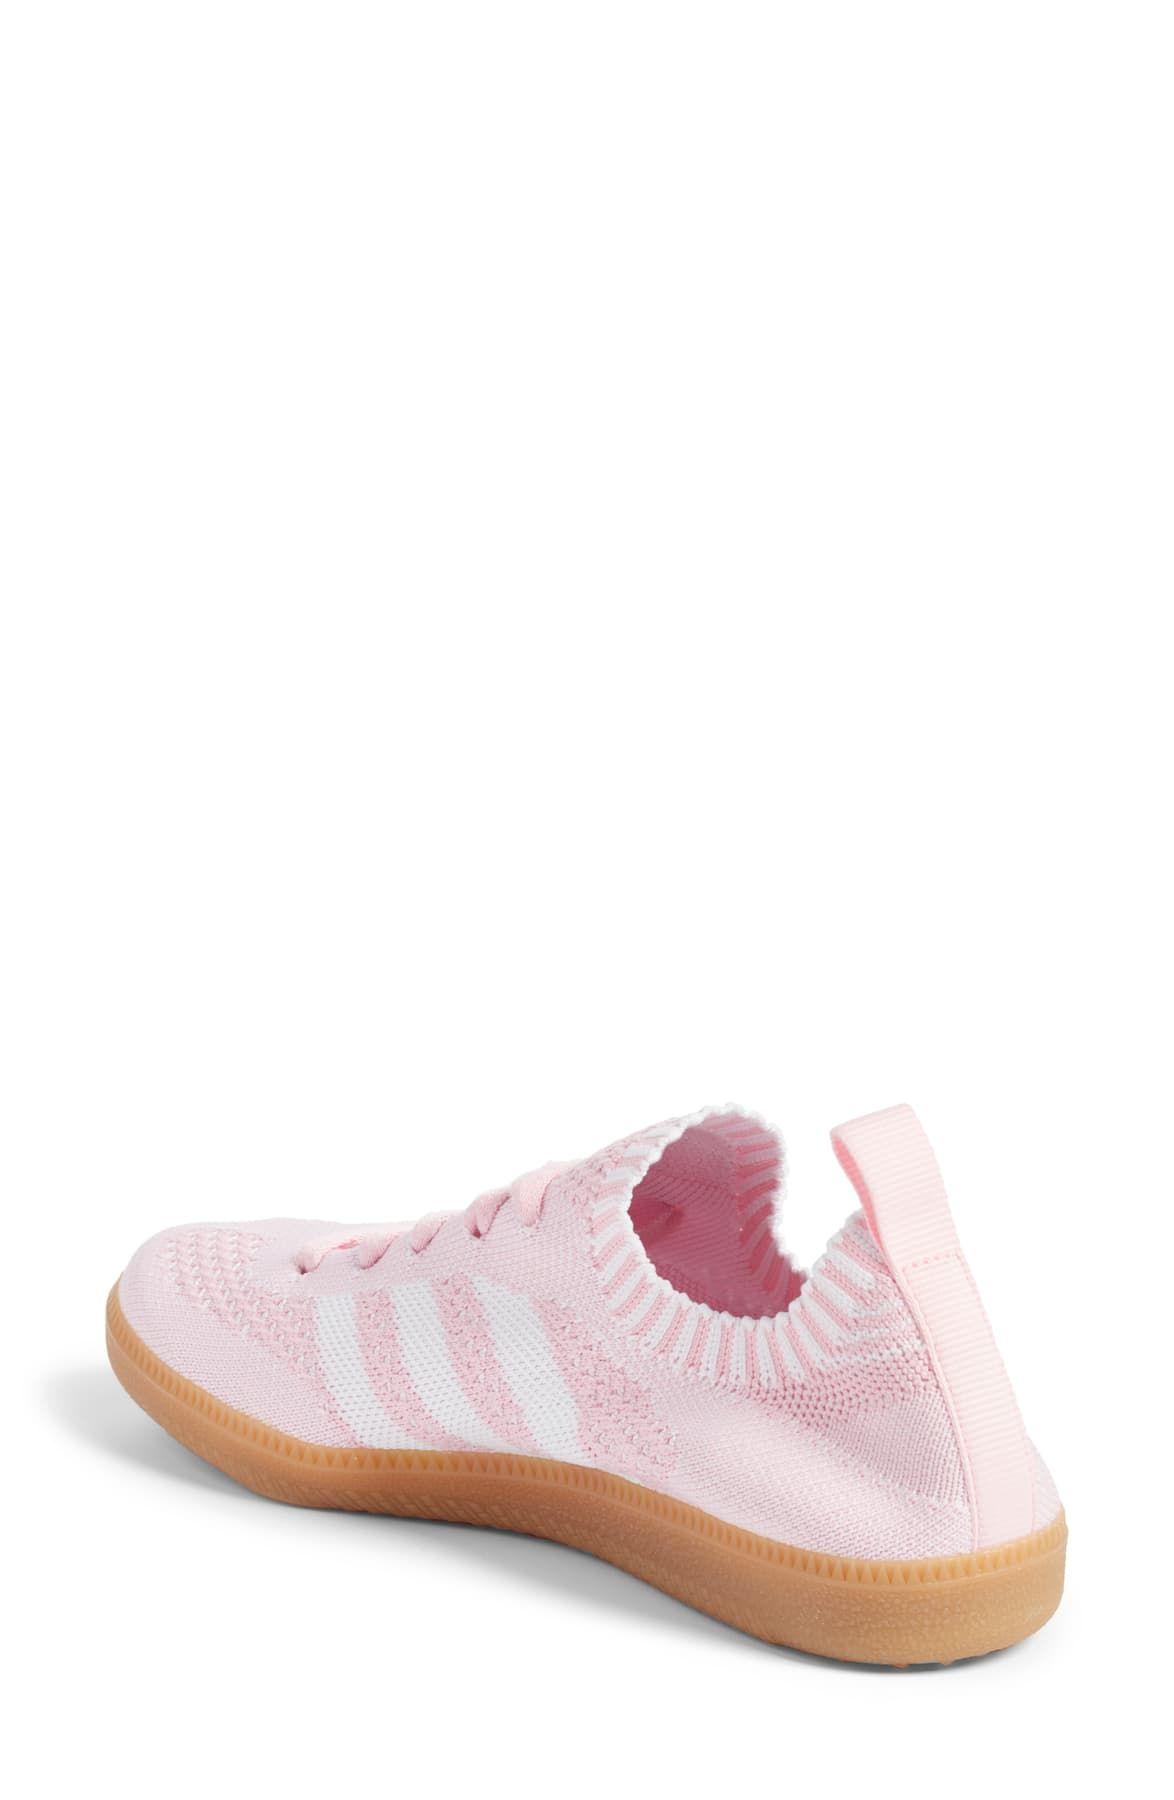 adidas Samba Primeknit Shoes in Pink | Lyst